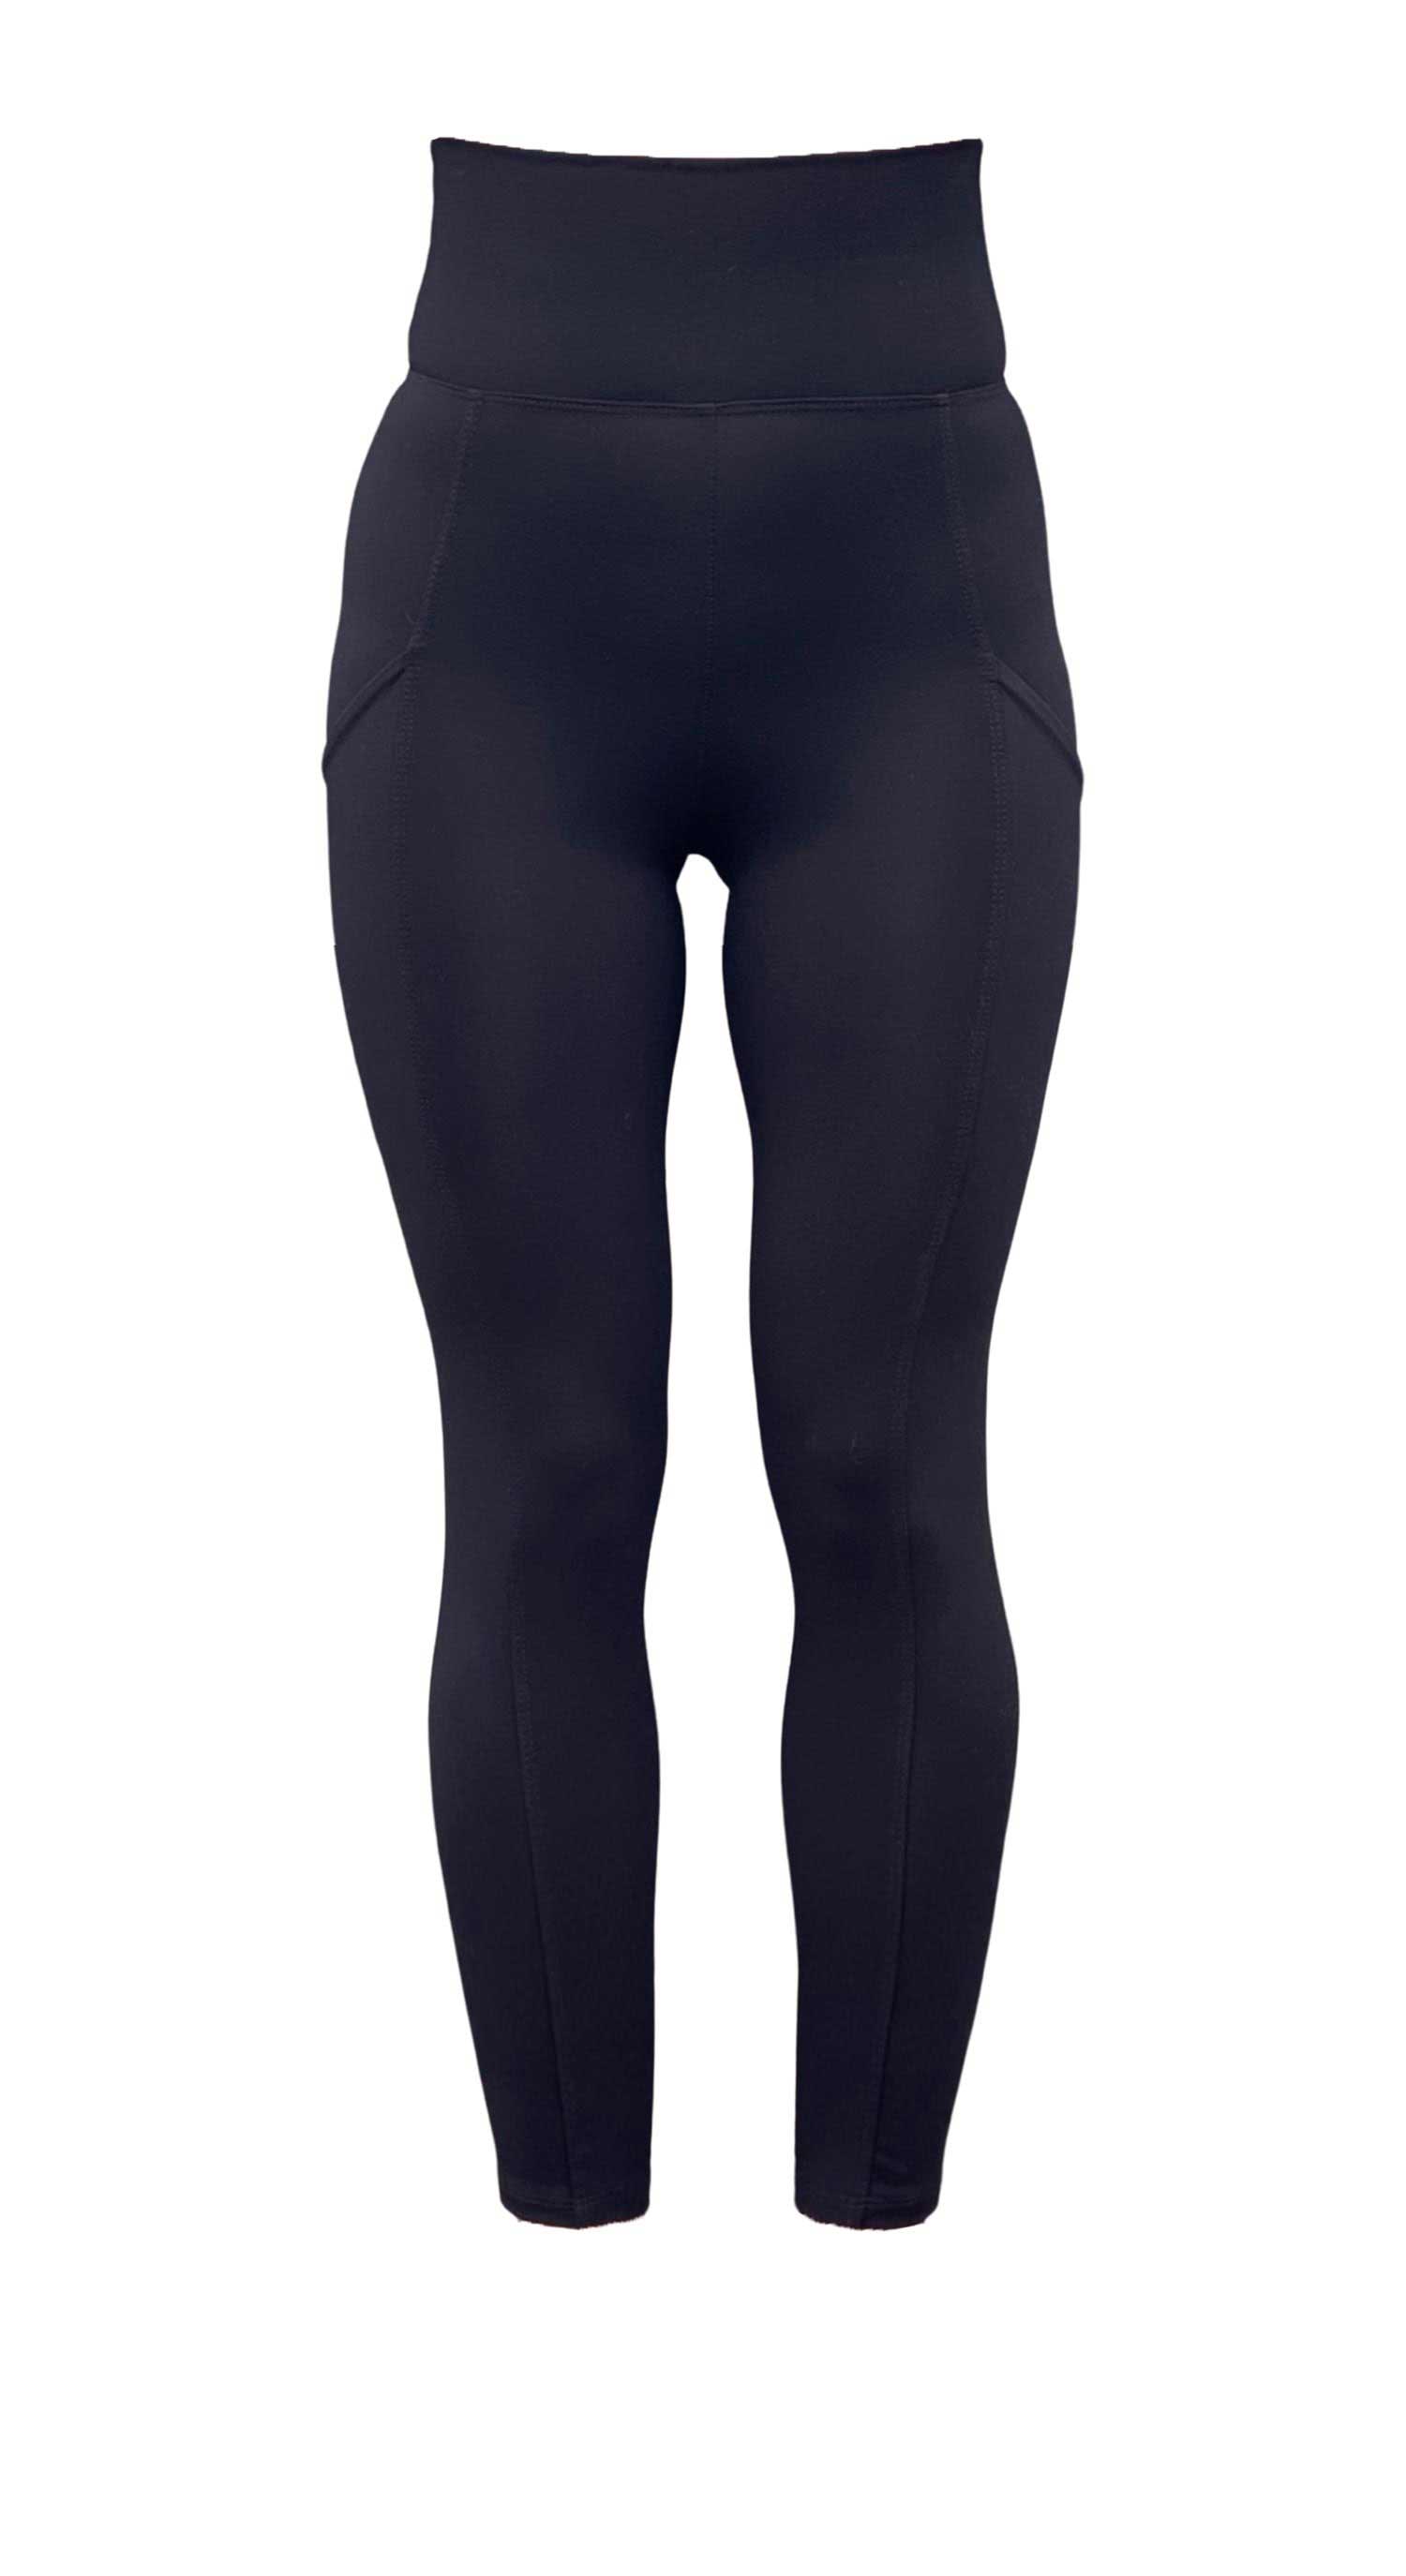 HMGYH satina high waisted leggings for women Plus High Waist Slant Pocket  Skinny Pants (Color : Black, Size : Petite S)